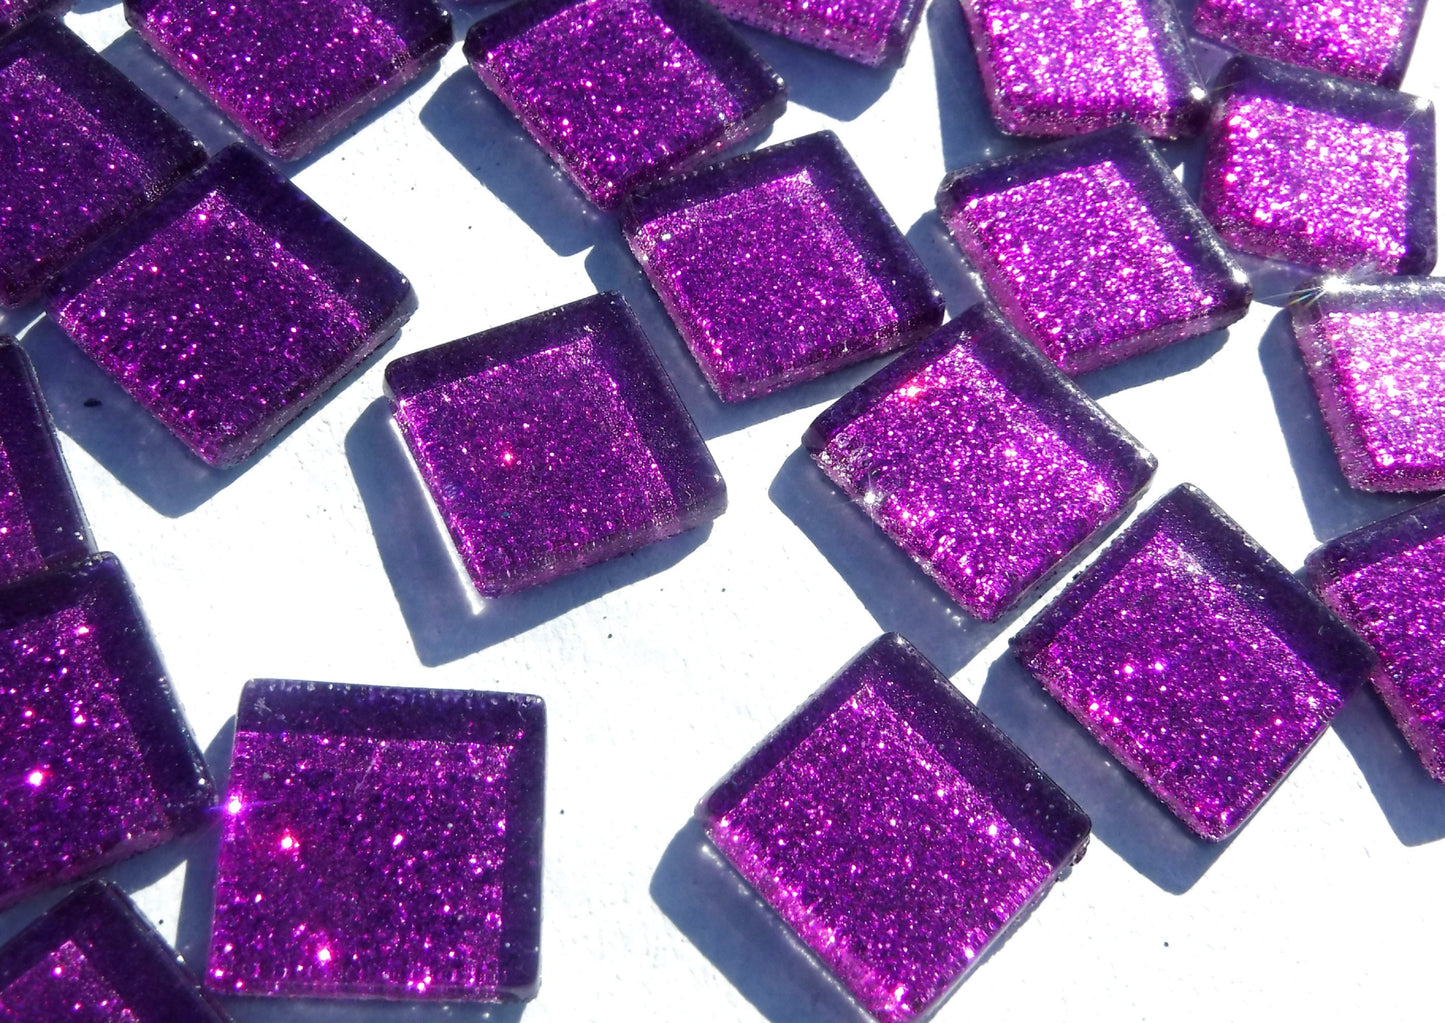 Purple Glitter Tiles - 20mm Mosaic Tiles - 25 Metallic Glass Tiles in Bright Violet